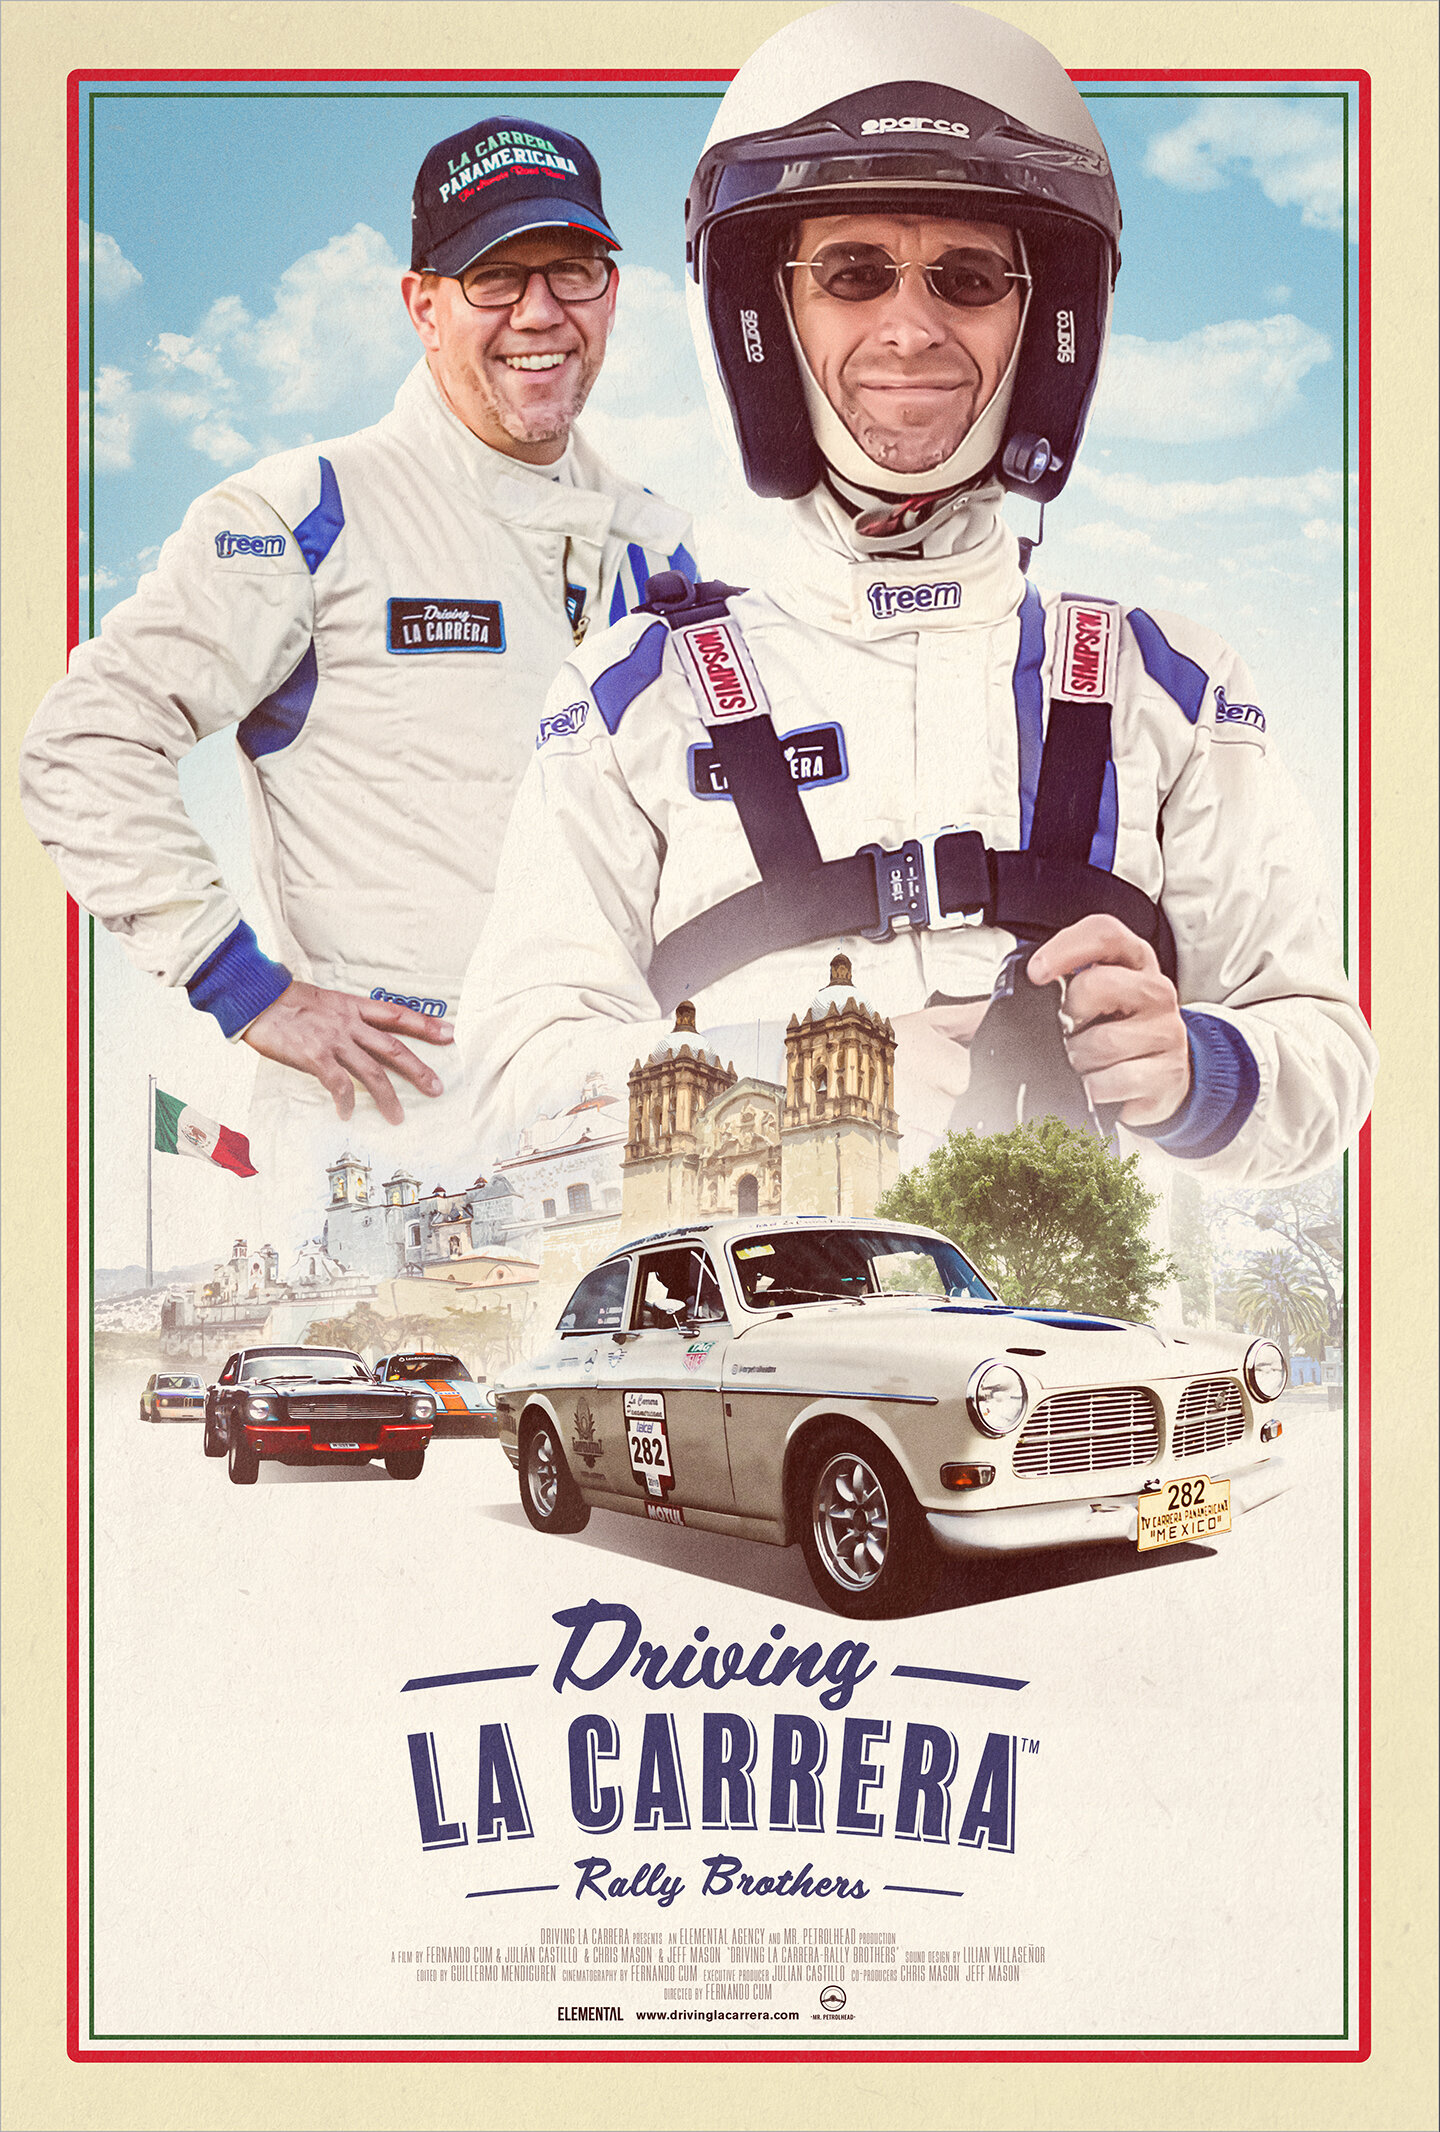 Driving-La-Carrera-Rally-Brothers-Movie-Poster.jpg